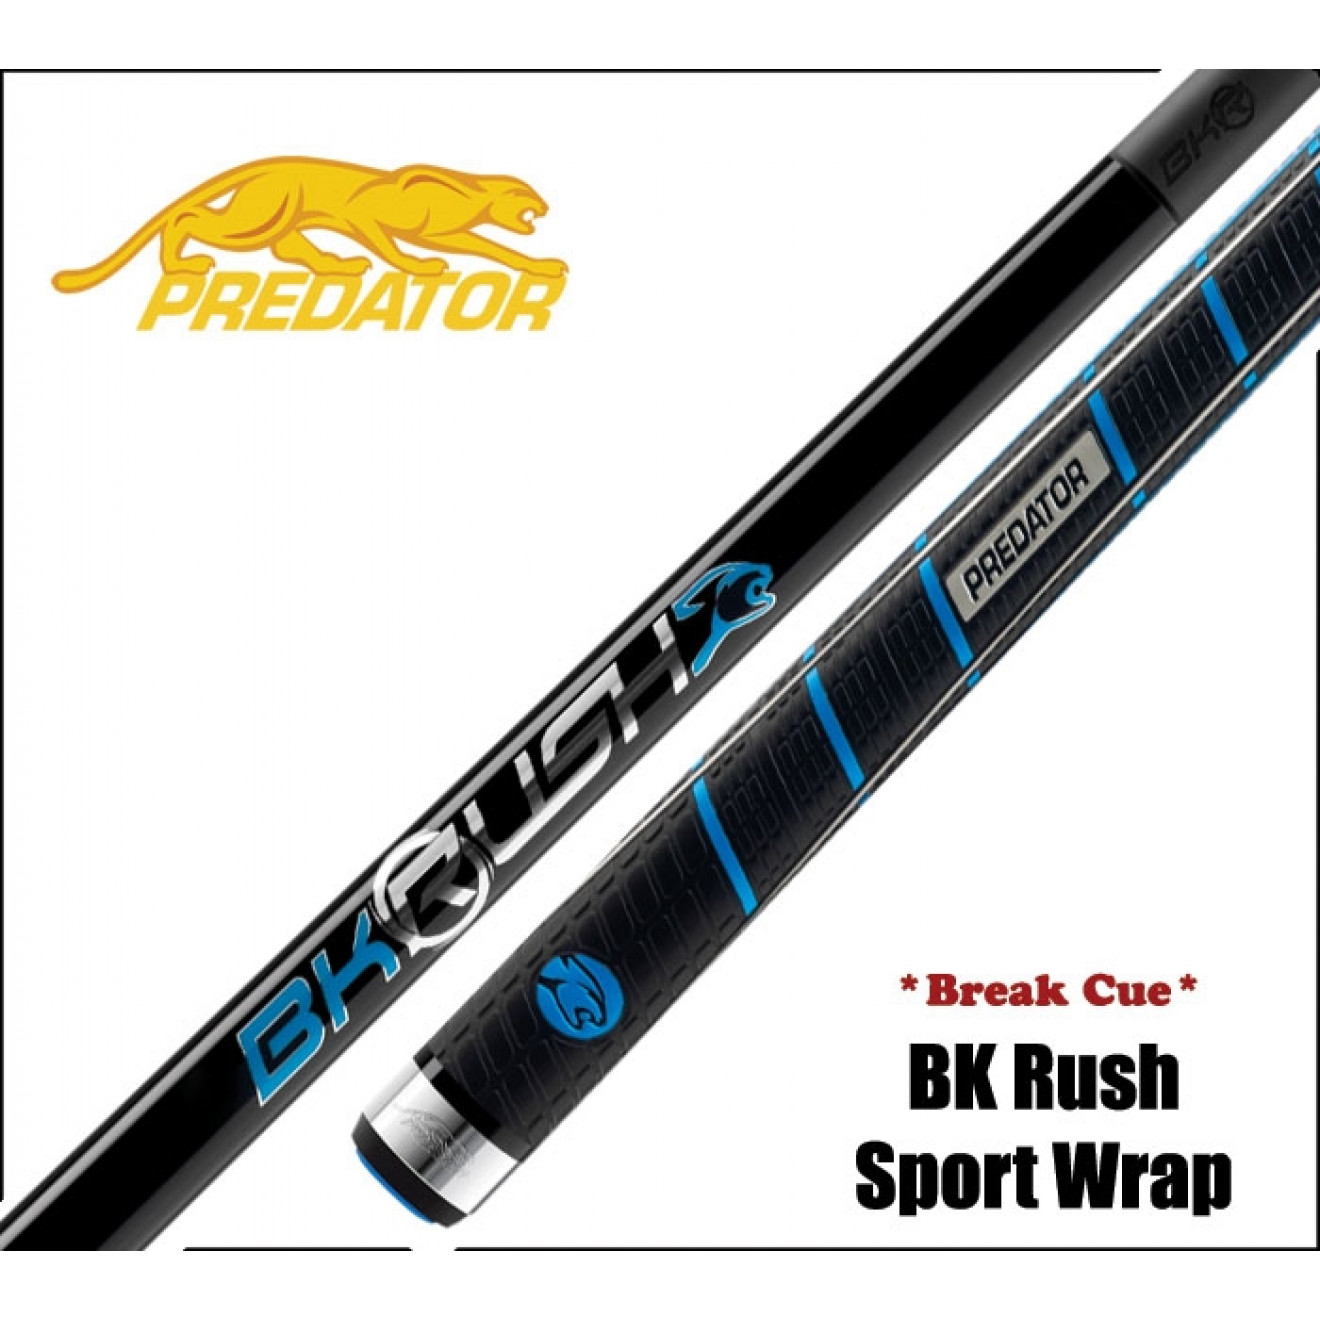 Predator BK Rush Sport Wrap BKRUSHSW Break cue